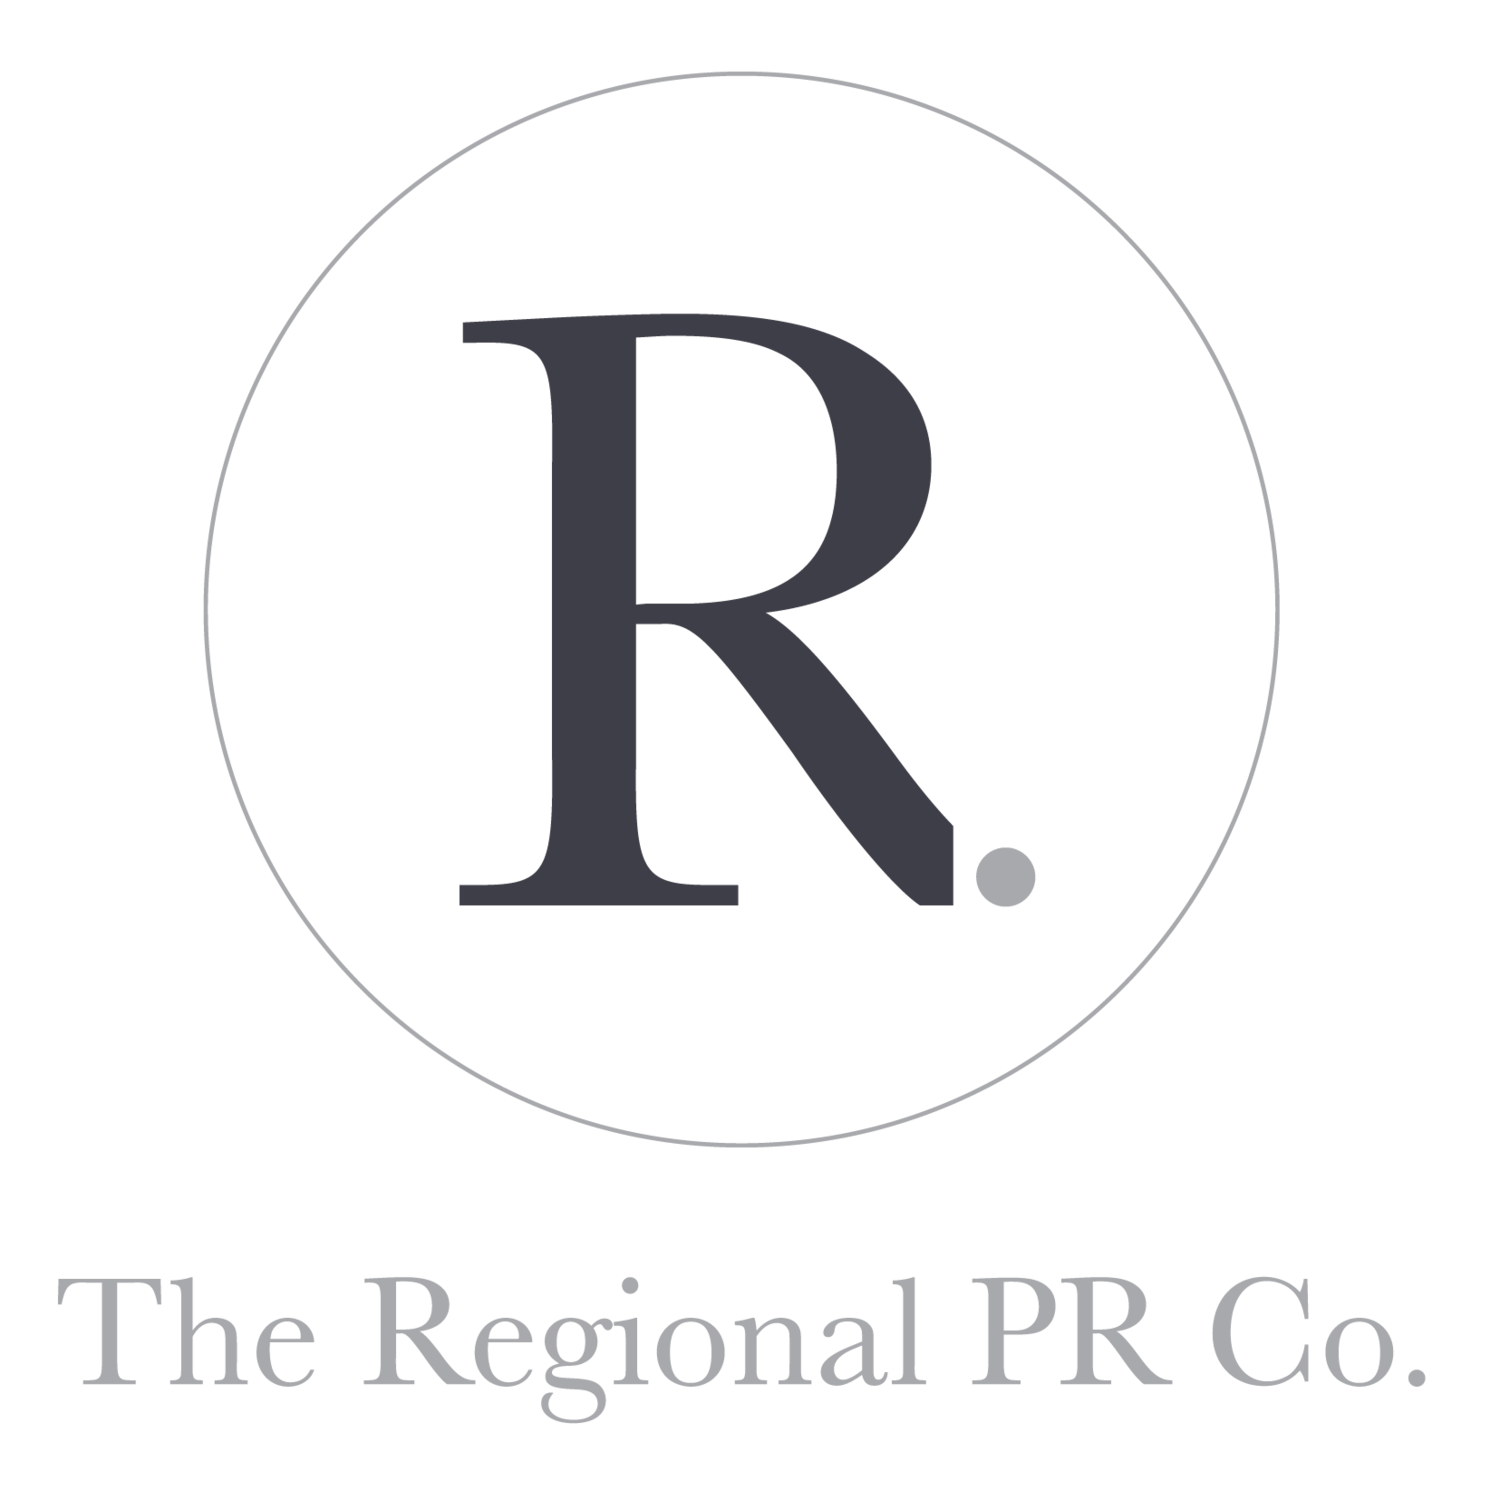 The Regional PR Co.